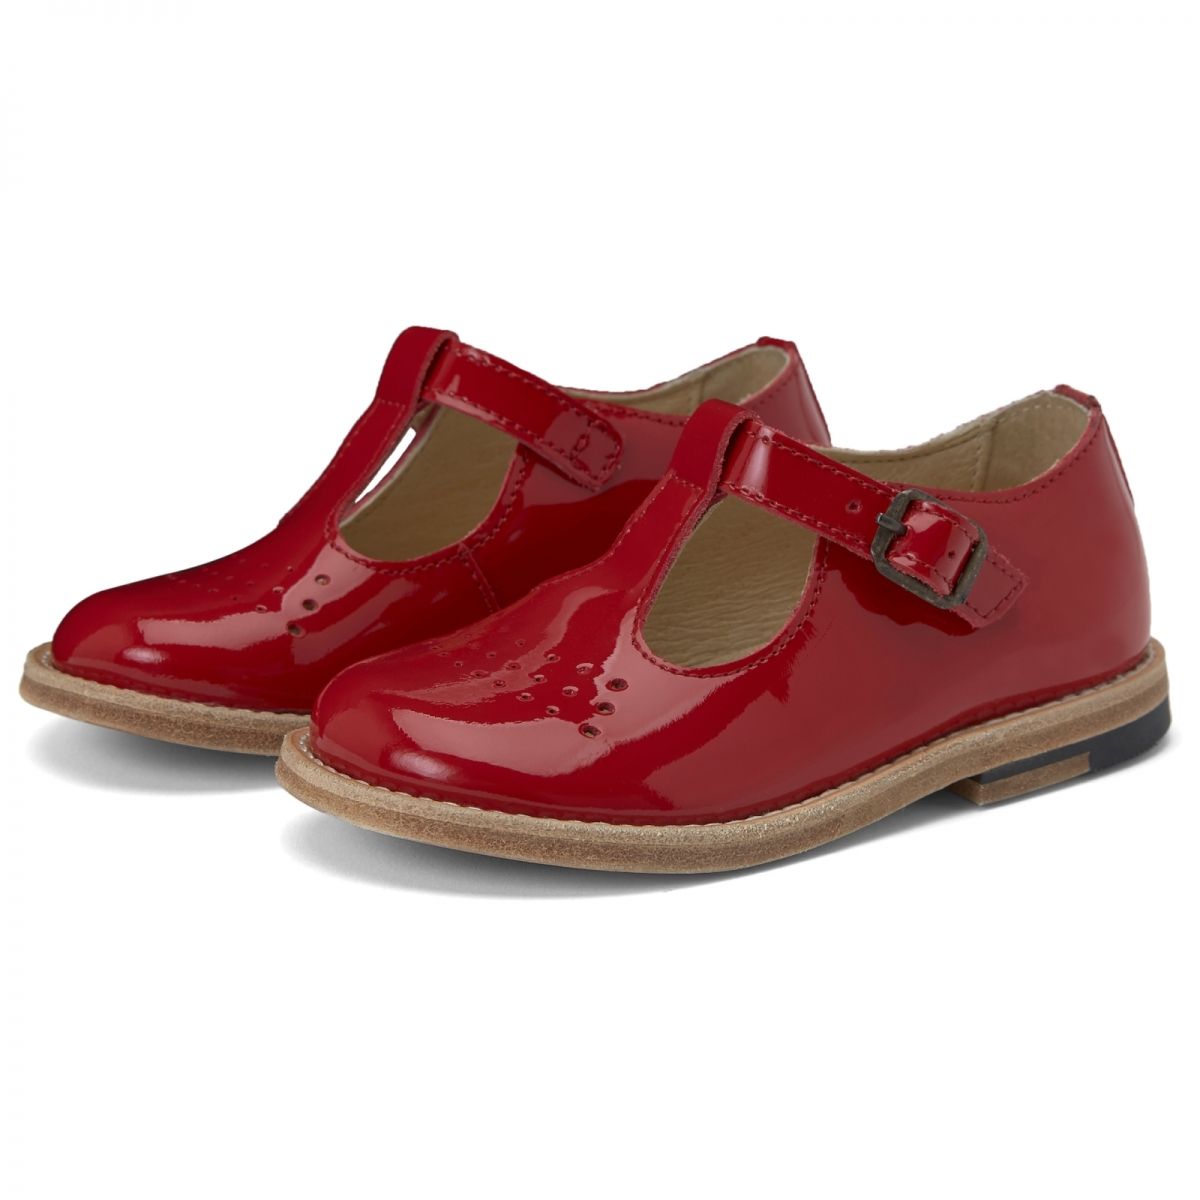 Young Soles Półbuty Dottie Patent Leather czerwone lakierki DOT-PATENT-RED 